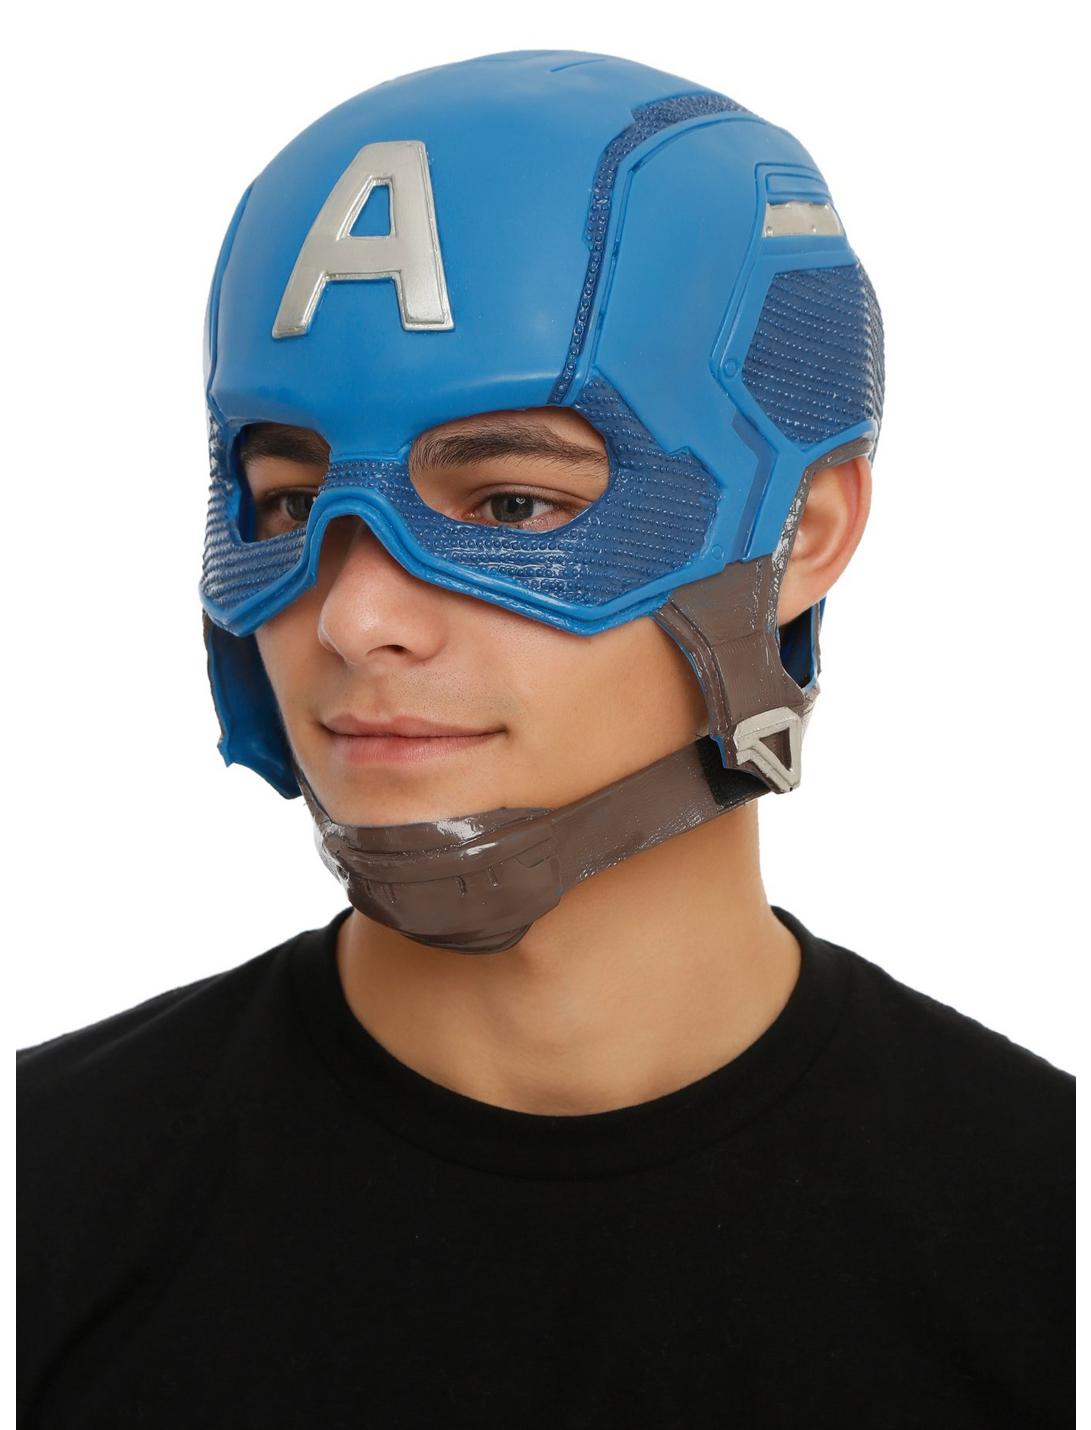 Marvel Captain America: Civil War Captain America Mask, , hi-res